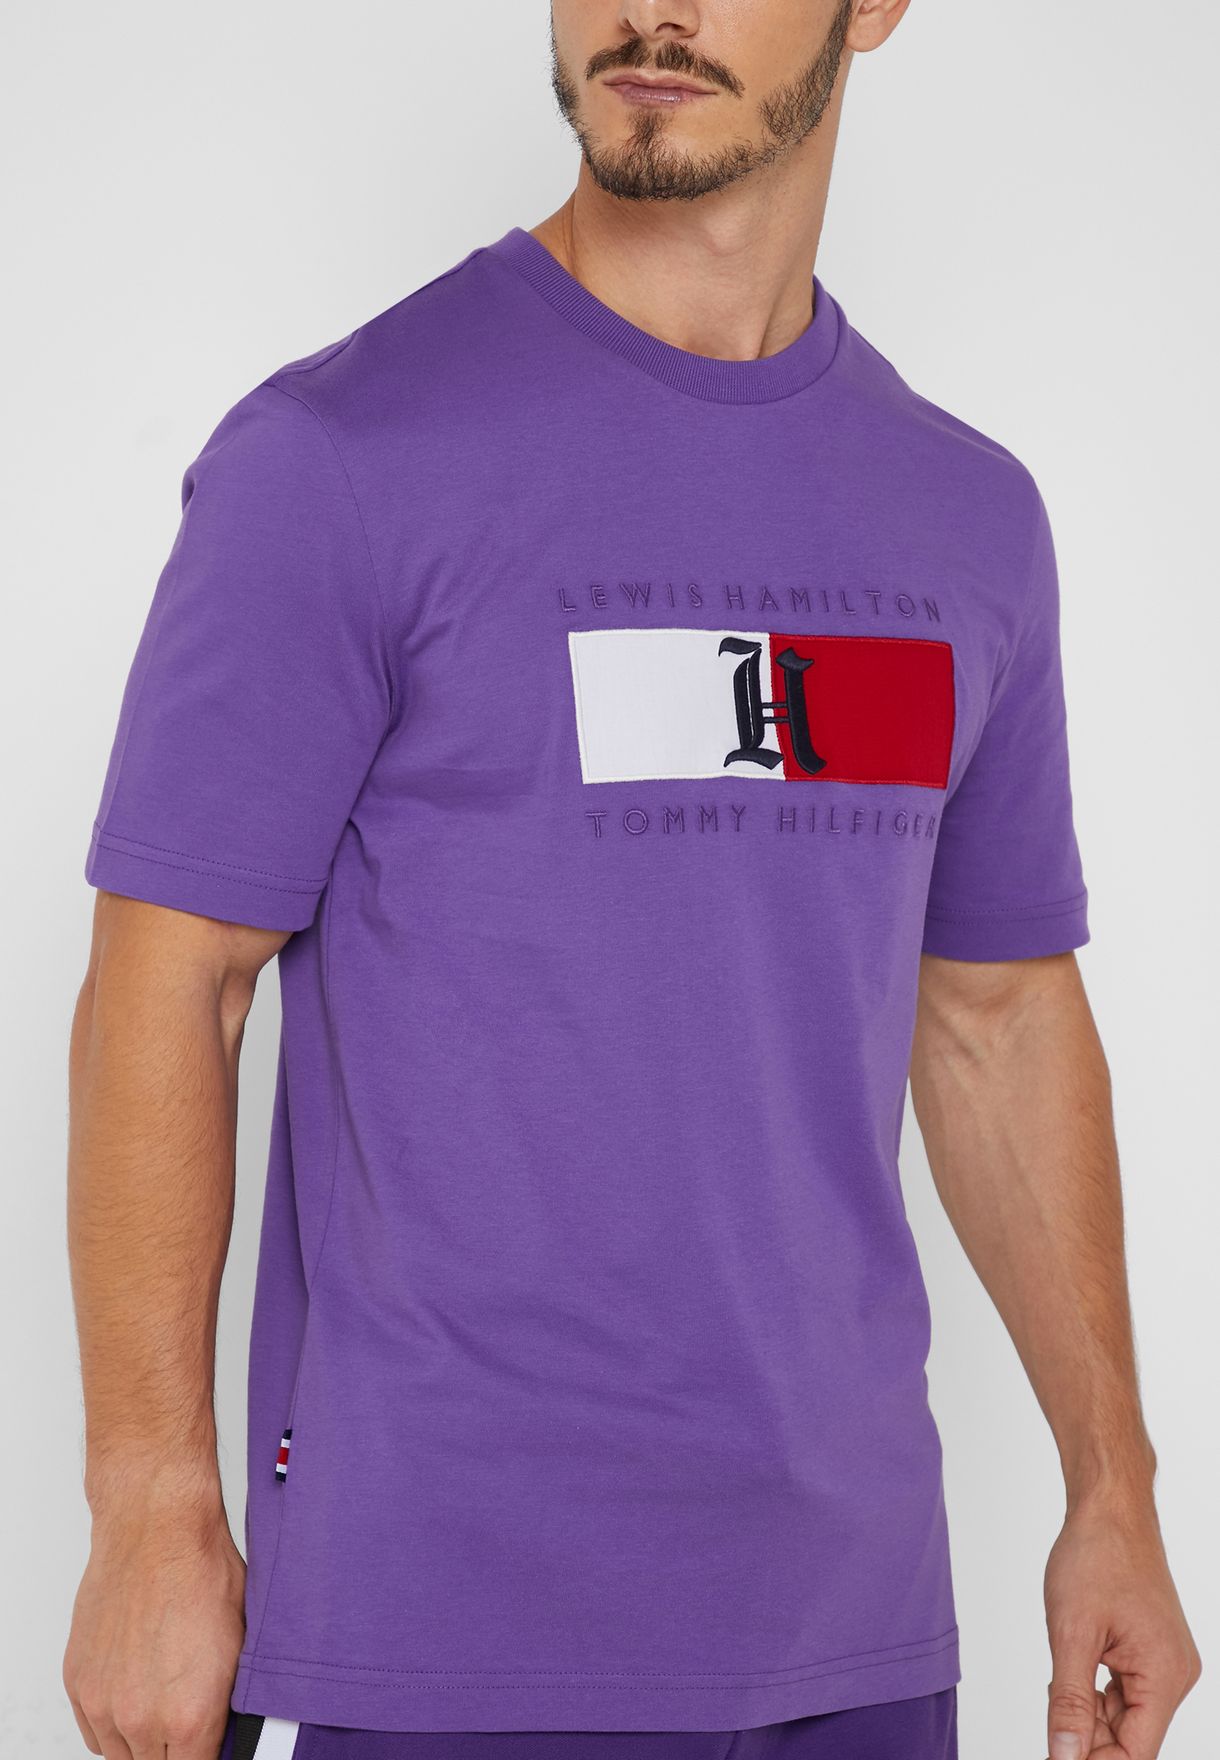 purple tommy hilfiger t shirt